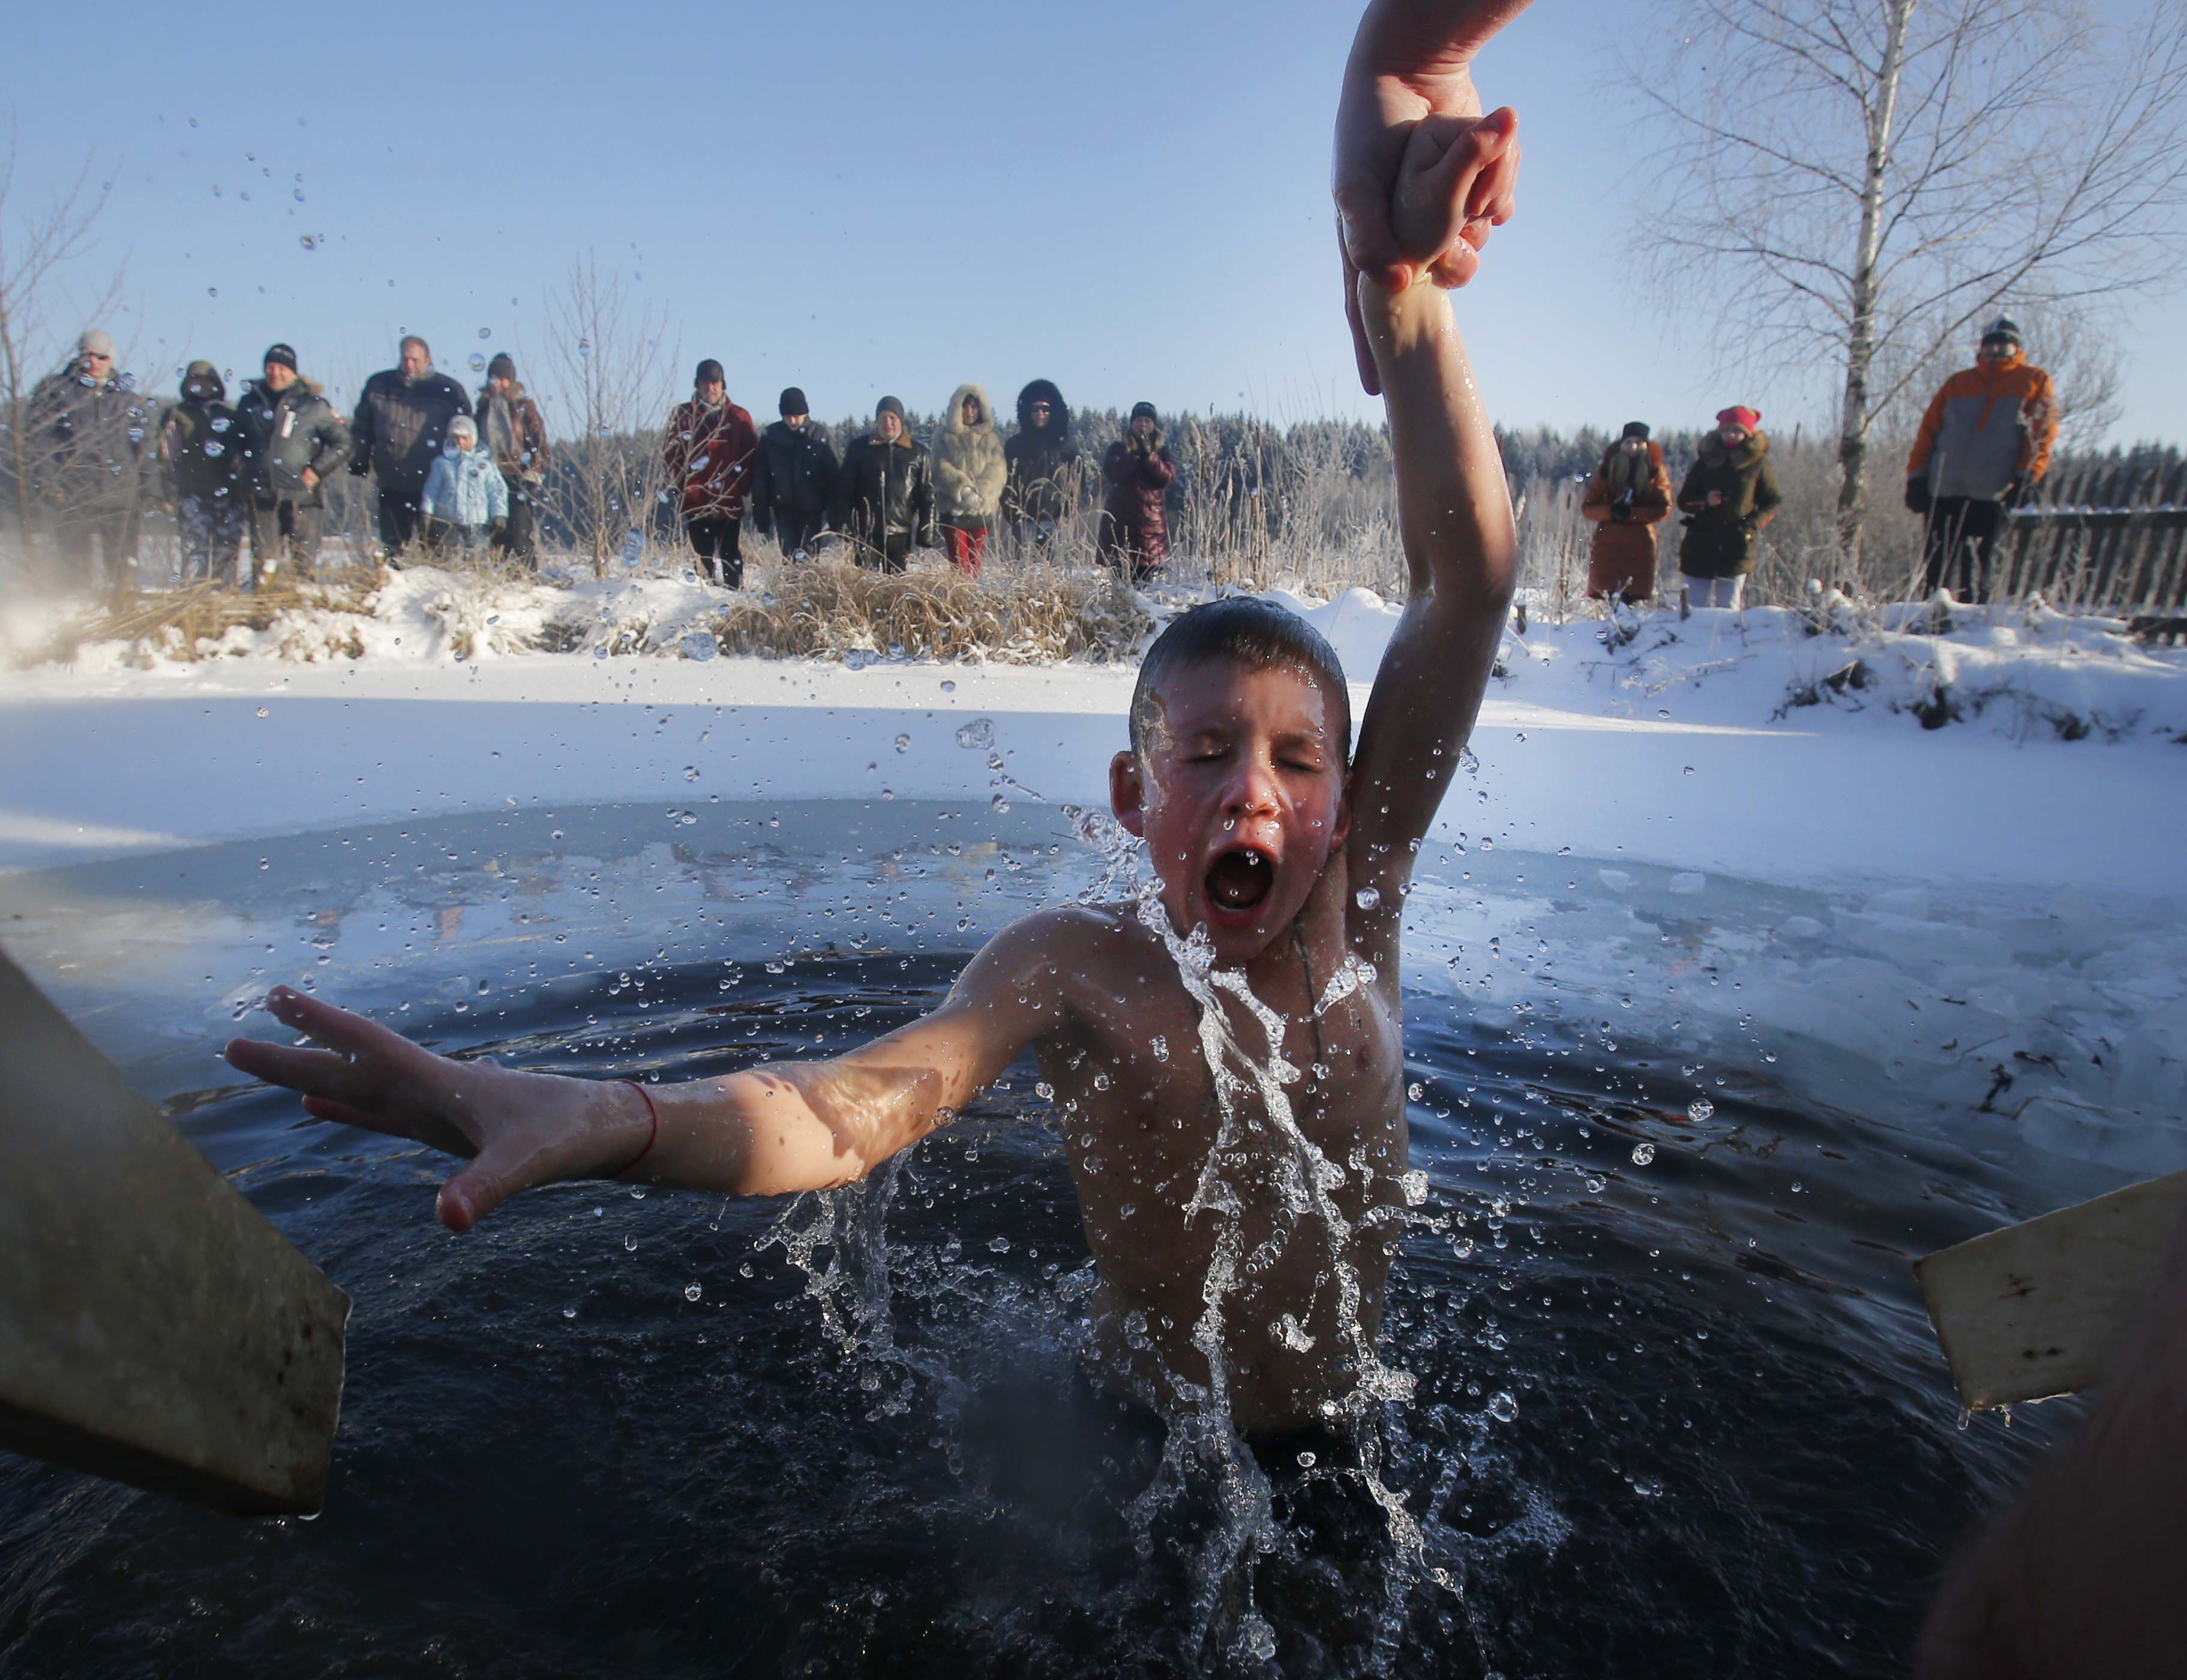 1,200 make icy splash in Lake George | The Daily Gazette